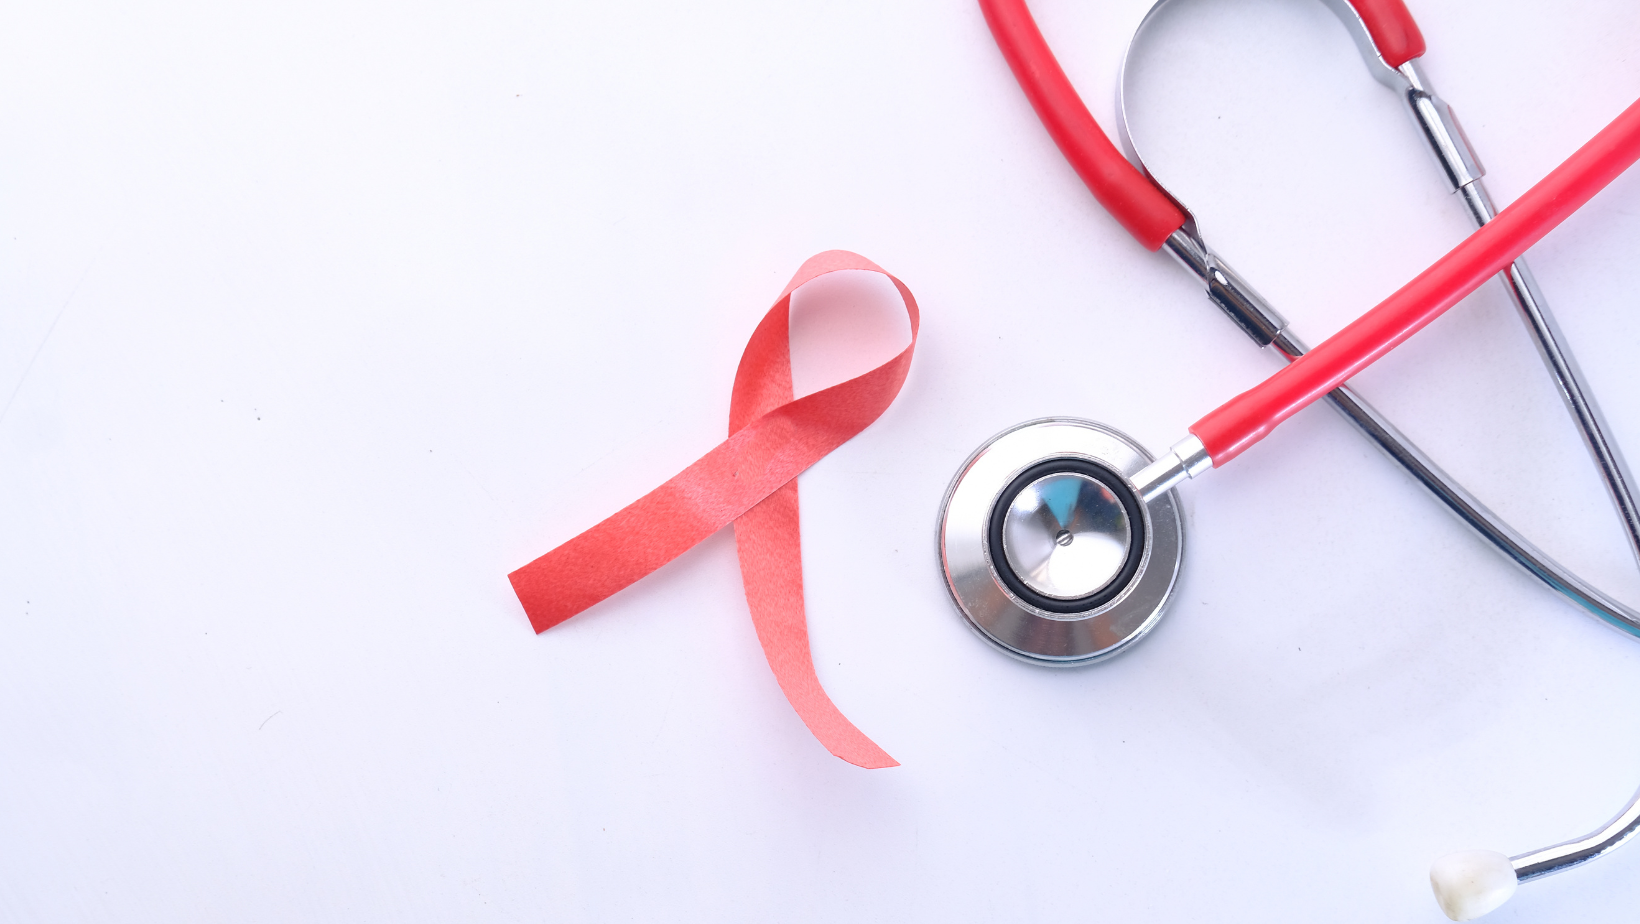 Vaginal dryness common in cancer survivors - Sanford Health News